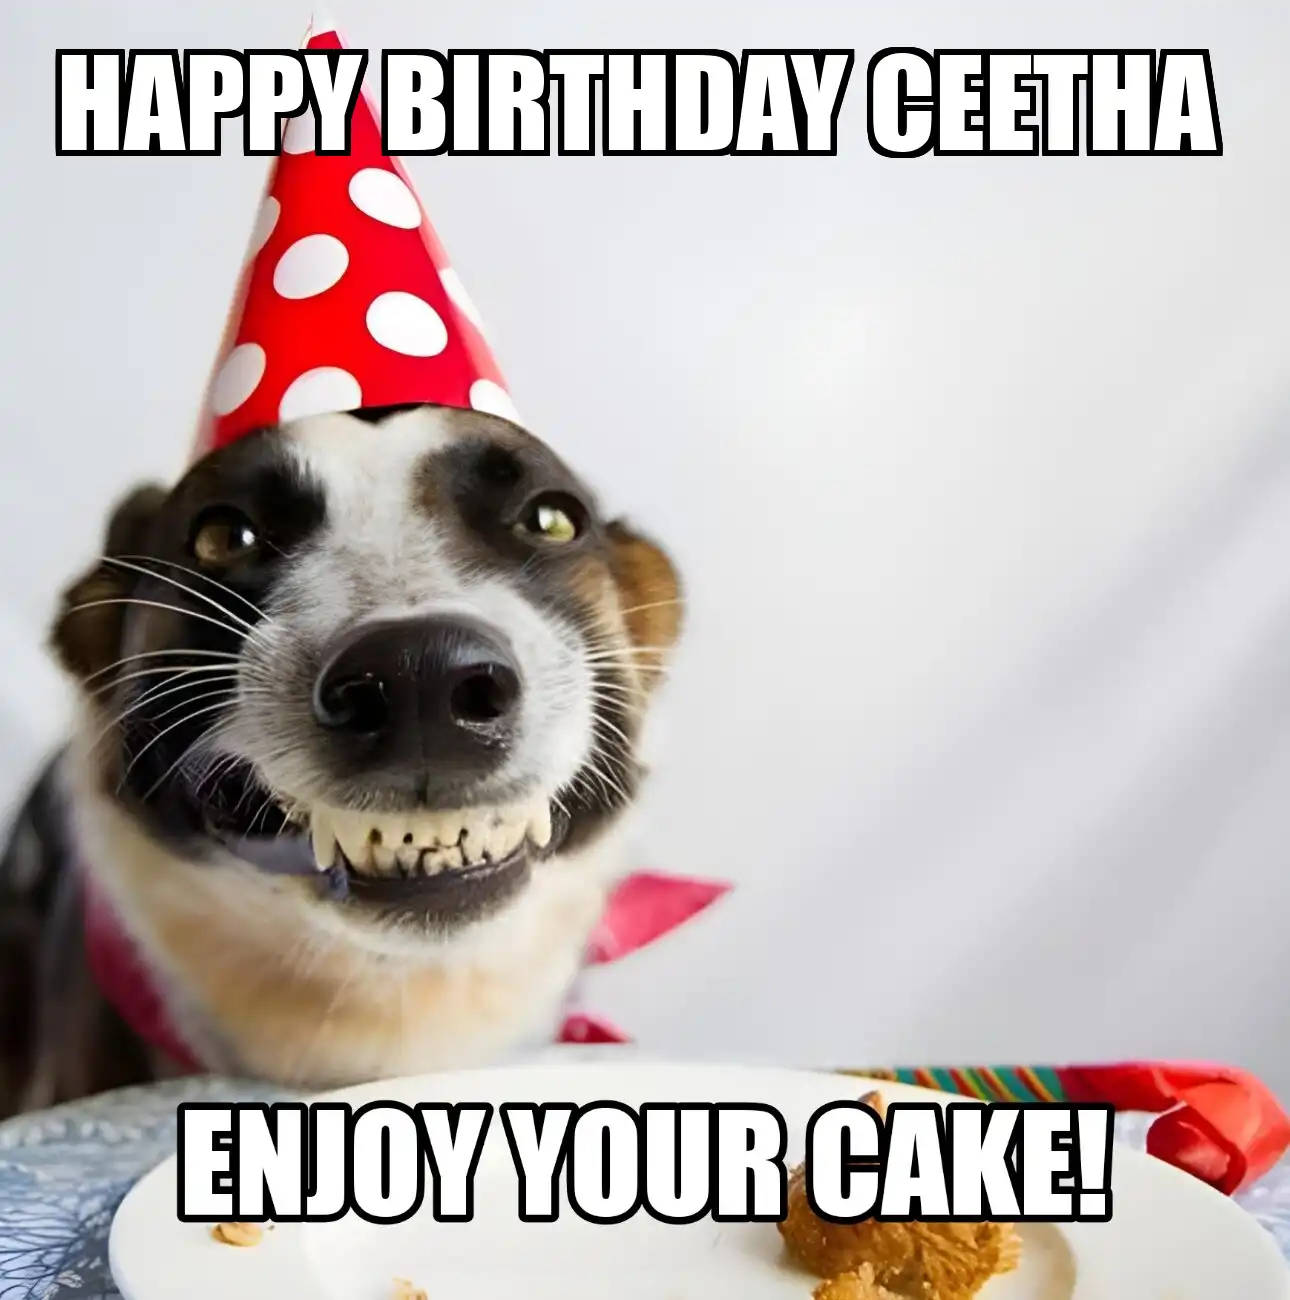 Happy Birthday Ceetha Enjoy Your Cake Dog Meme